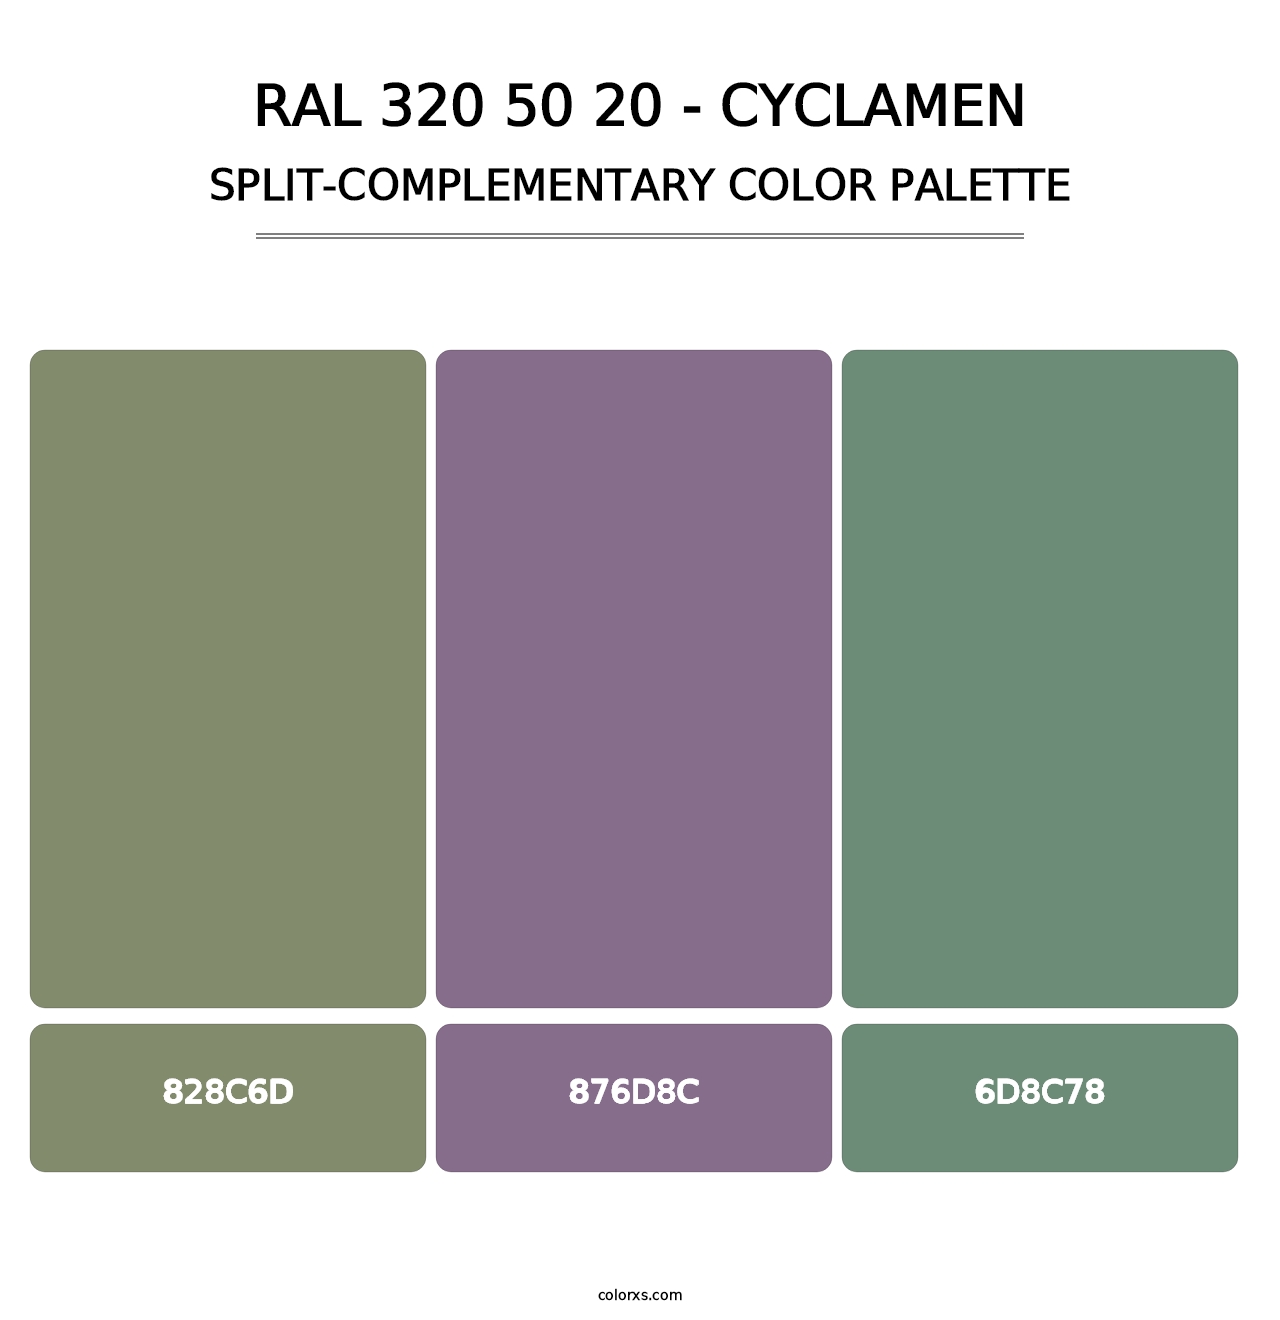 RAL 320 50 20 - Cyclamen - Split-Complementary Color Palette